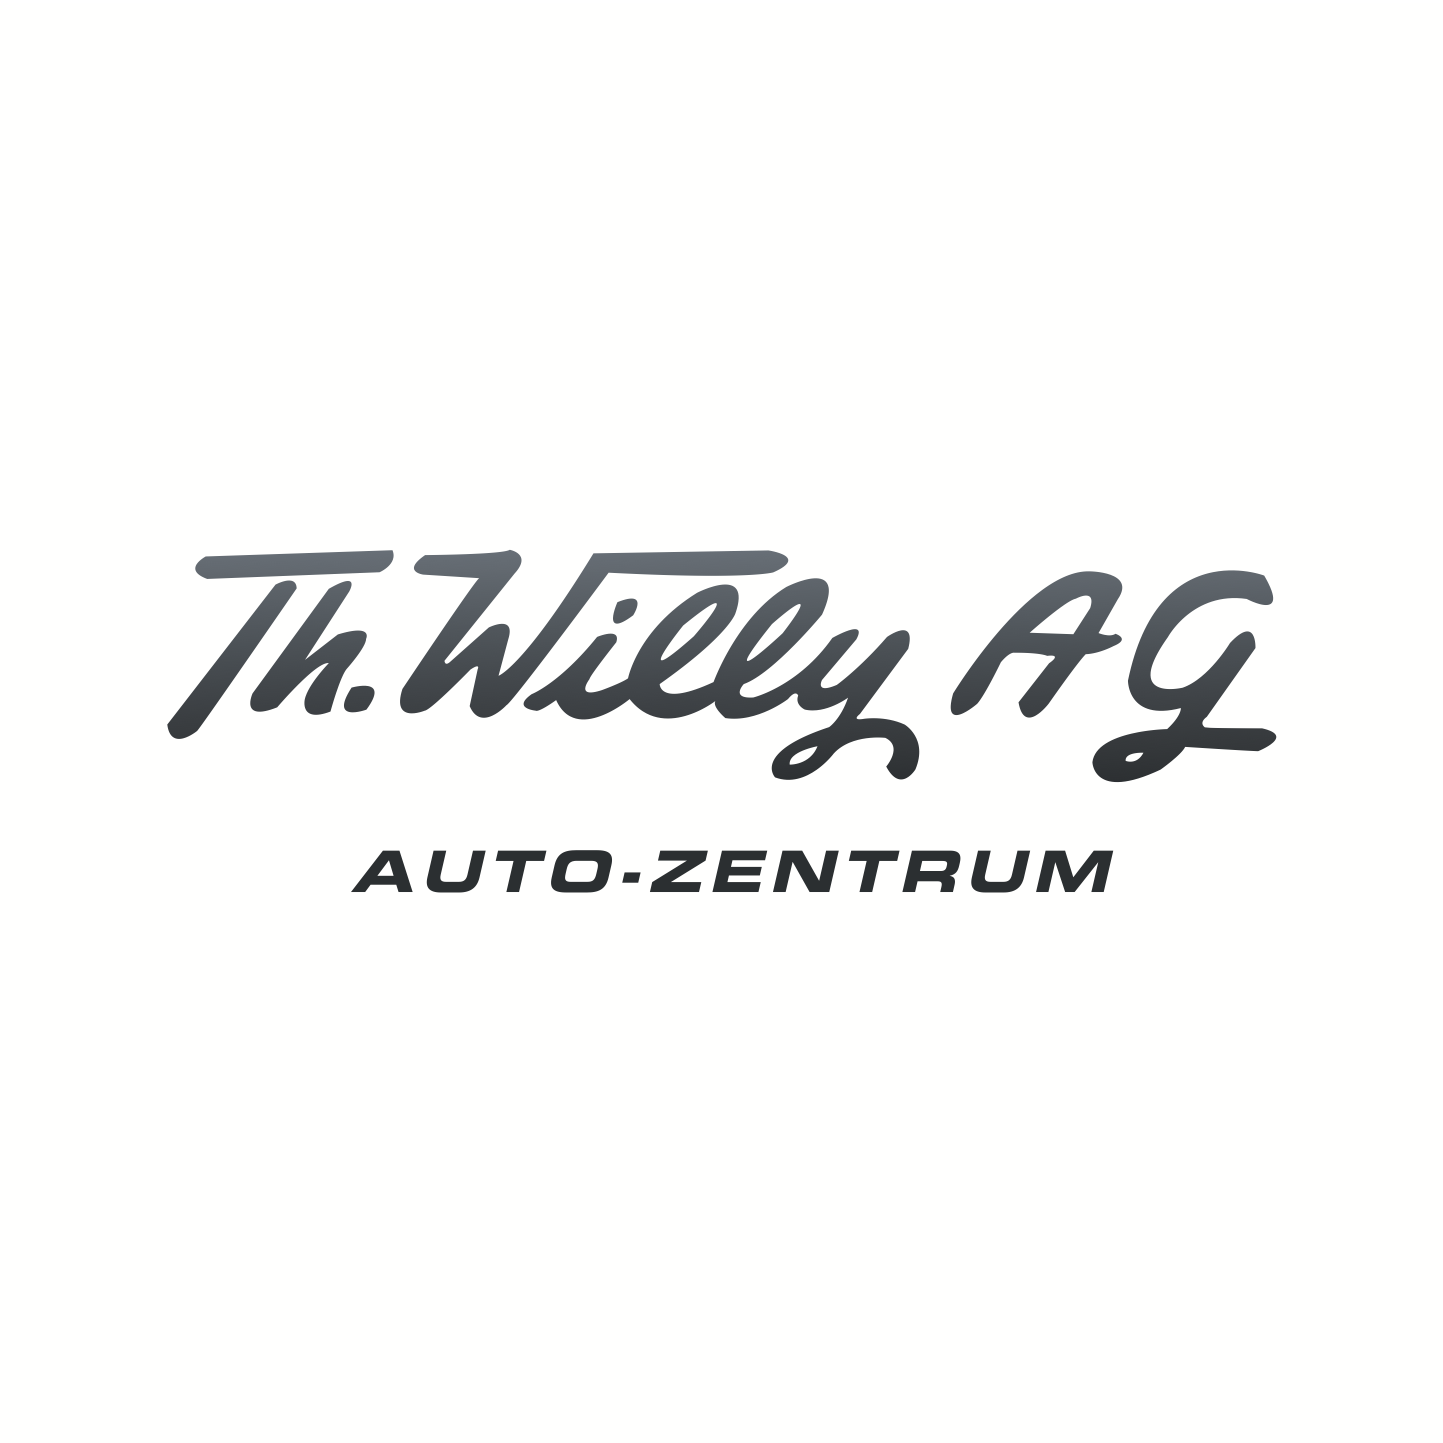 Th. Willy AG Auto-Zentrum (Luzern)